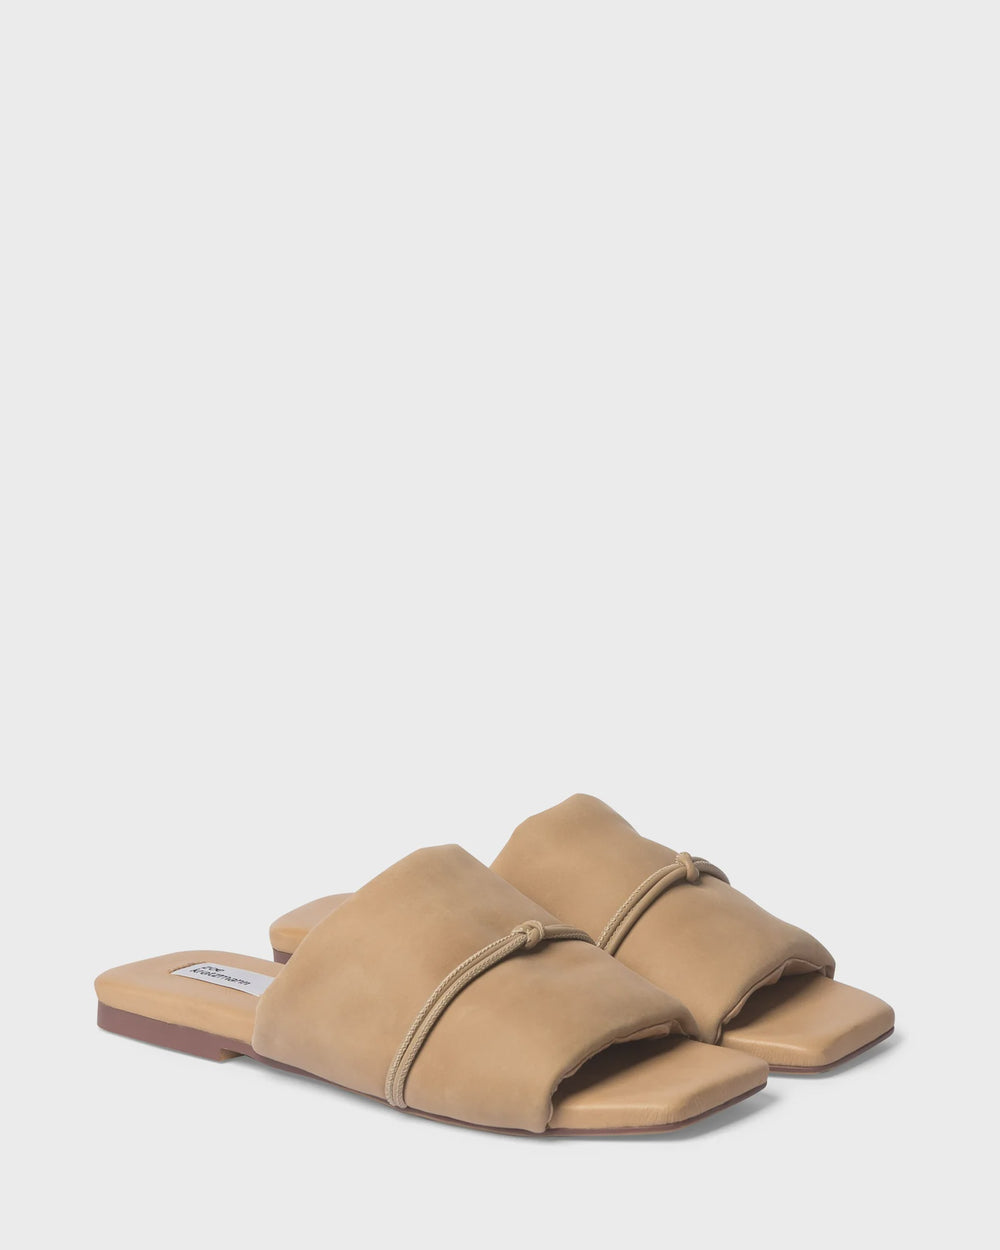 Brink Sandal - Desert Shoes Zoe Kratzmann   